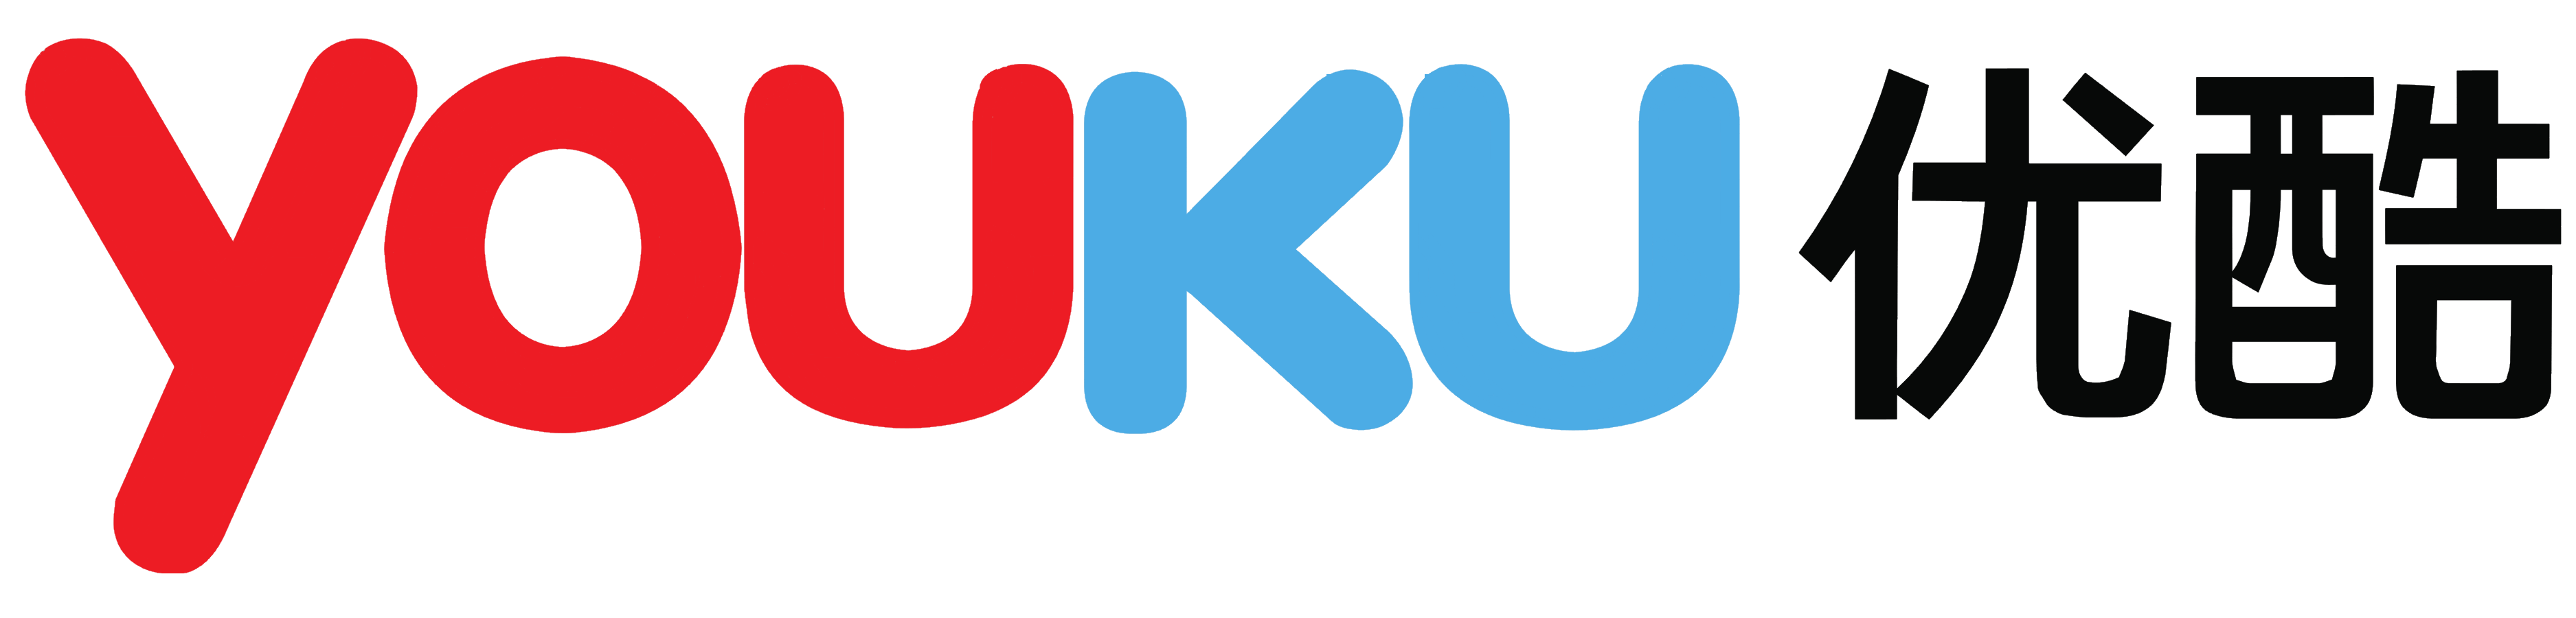 Youku (Youku Pluspng.com) Logo Download For Free - Youku, Transparent background PNG HD thumbnail